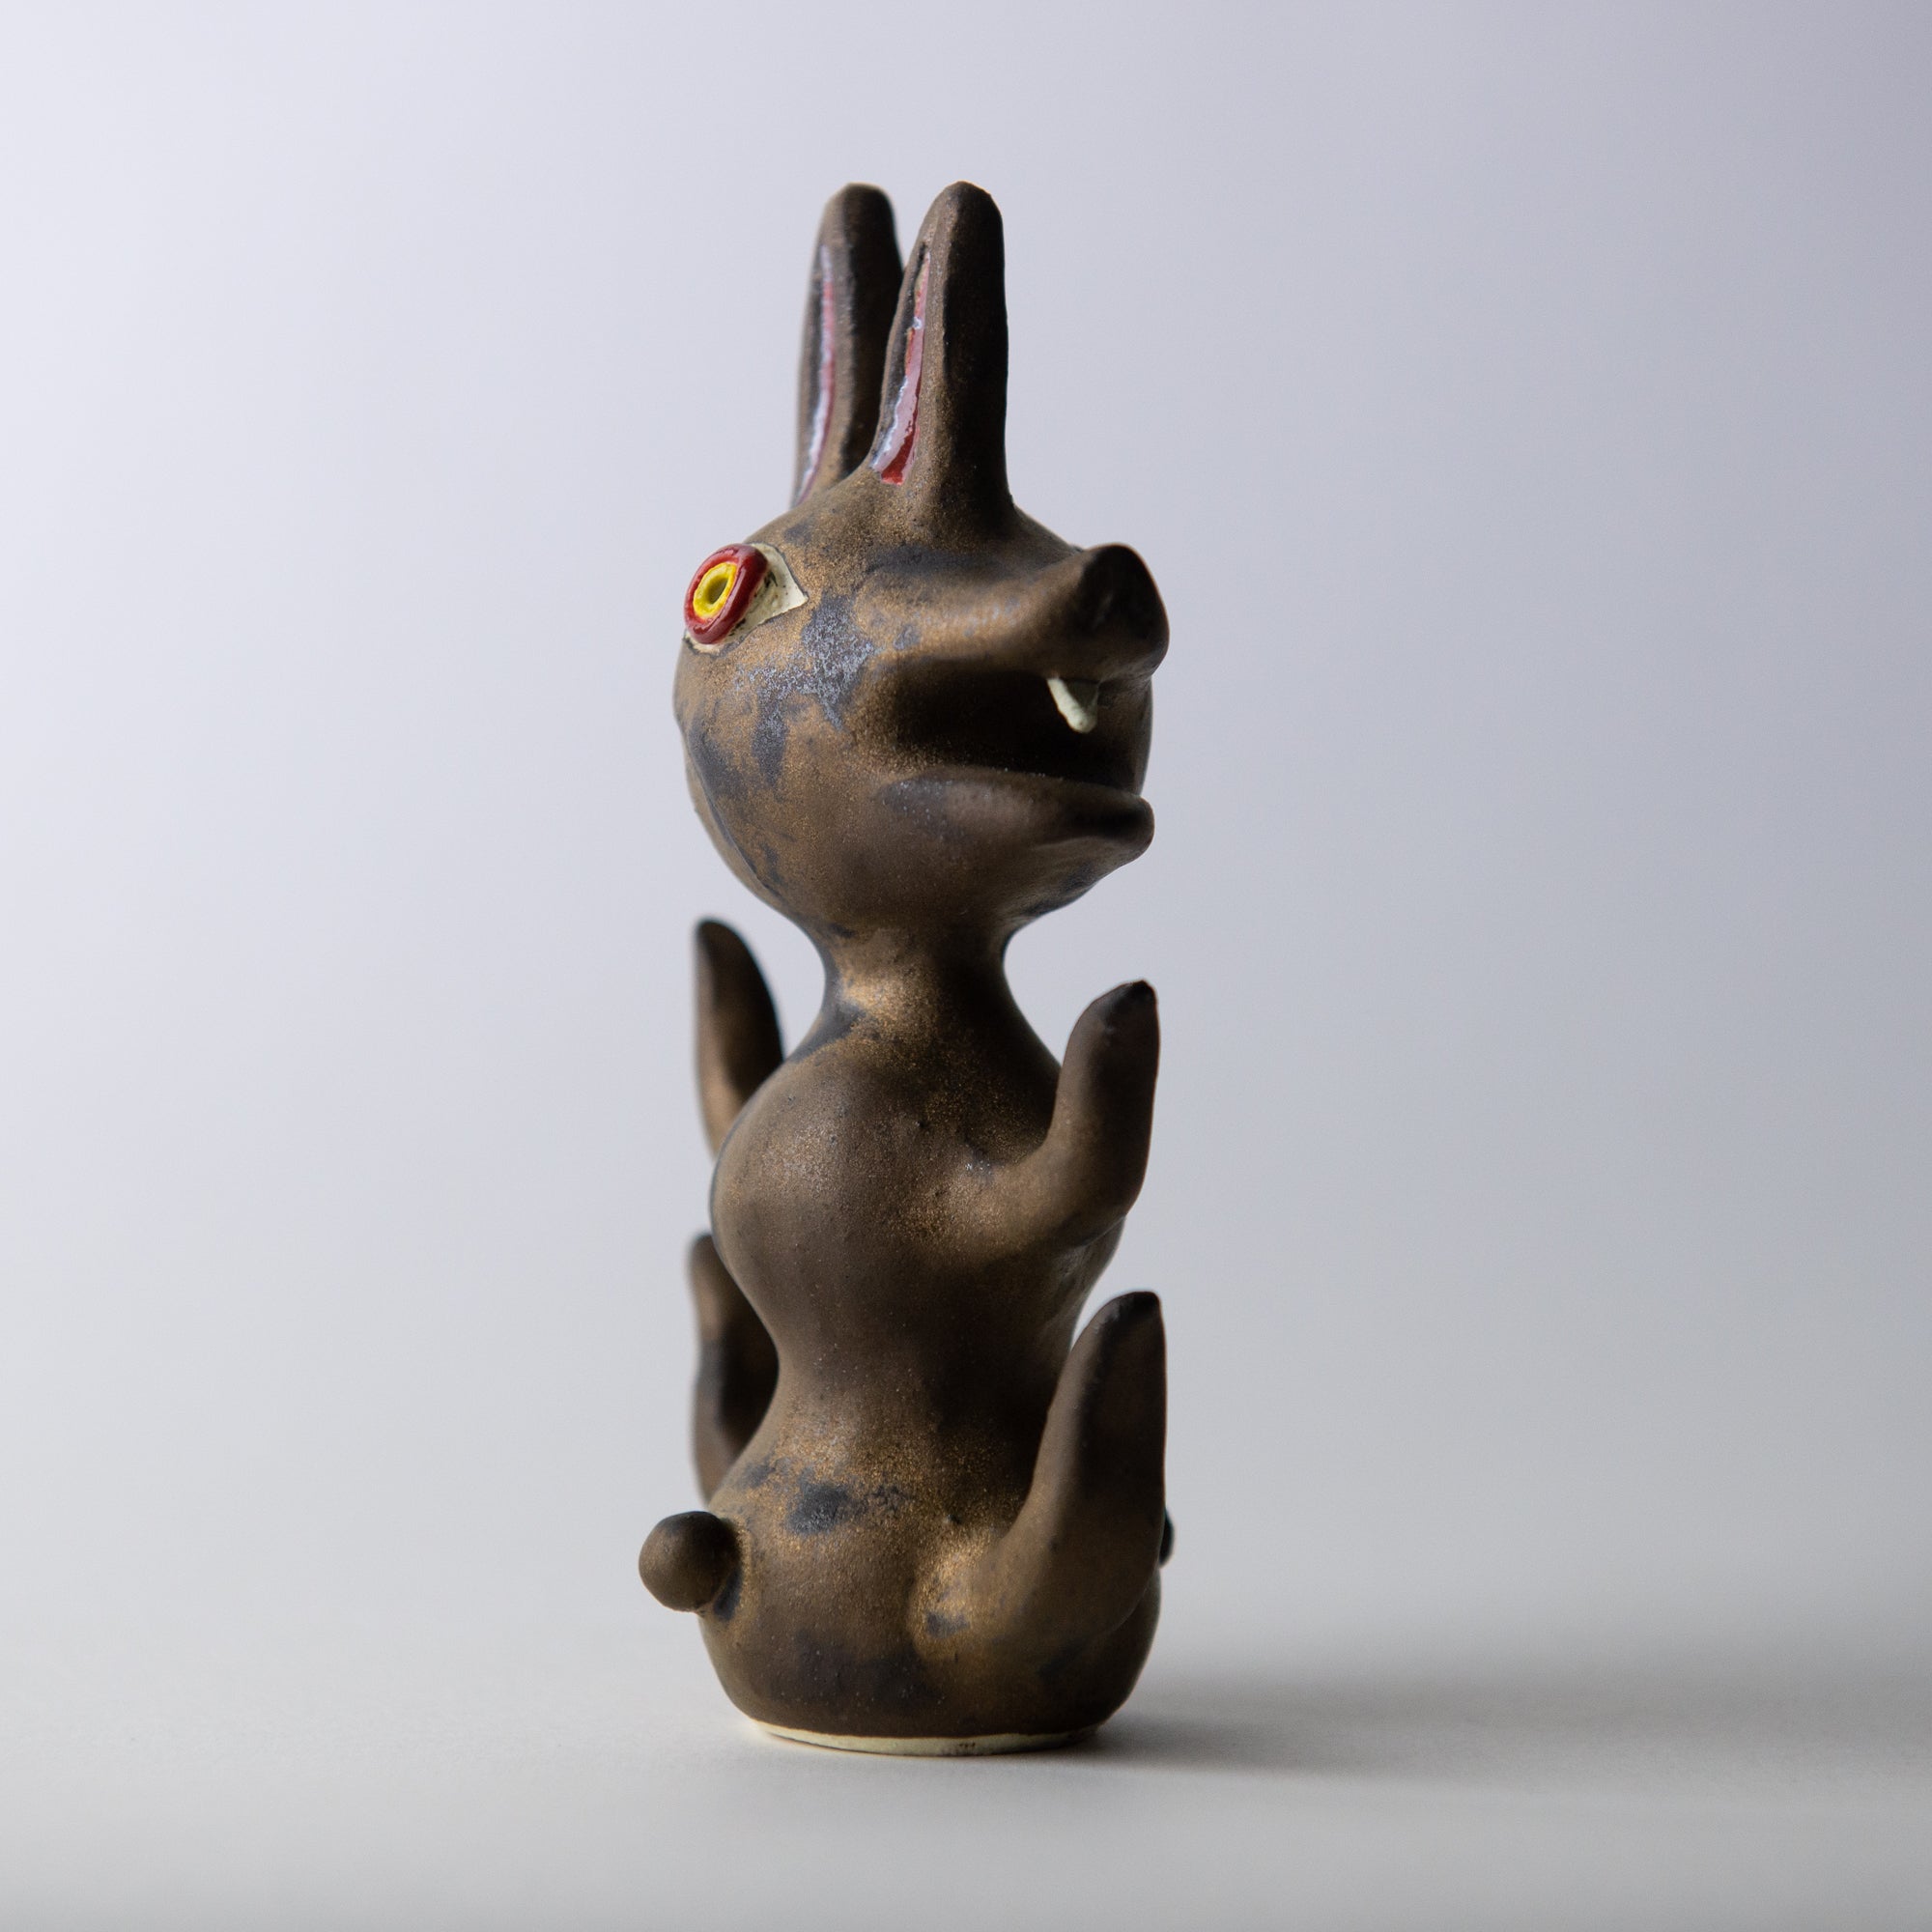 rabbit gold original sculpture